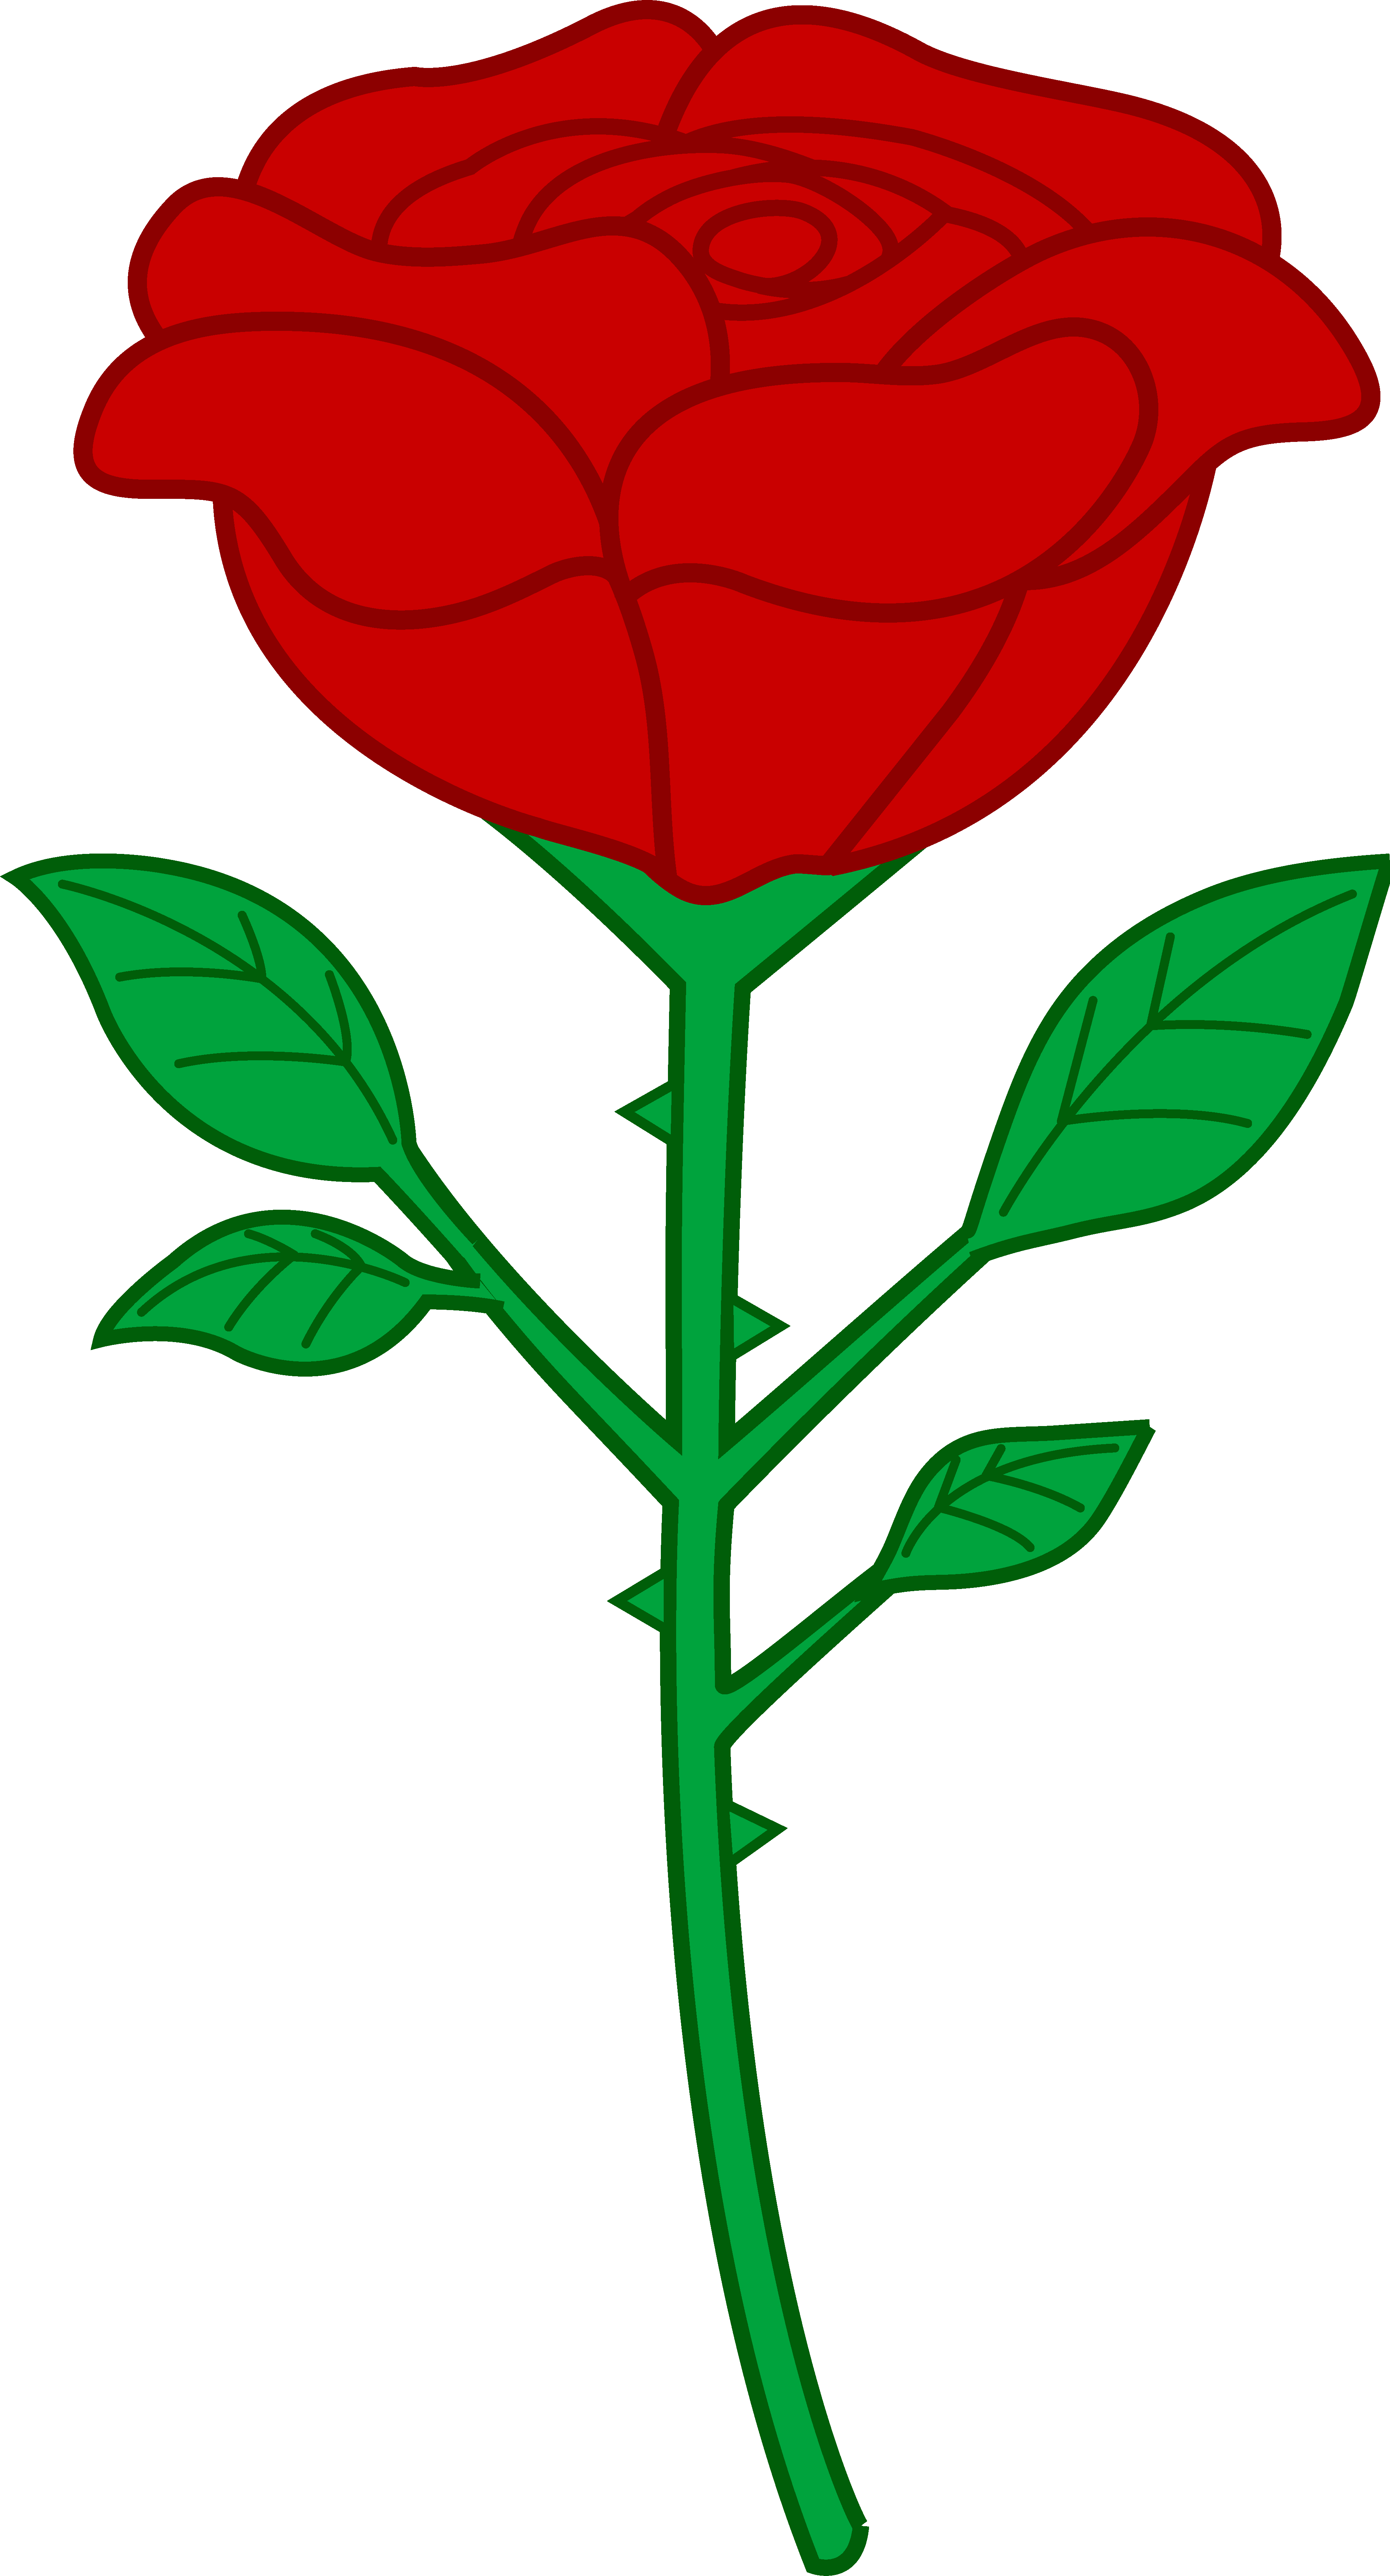 green rose clip art - photo #44